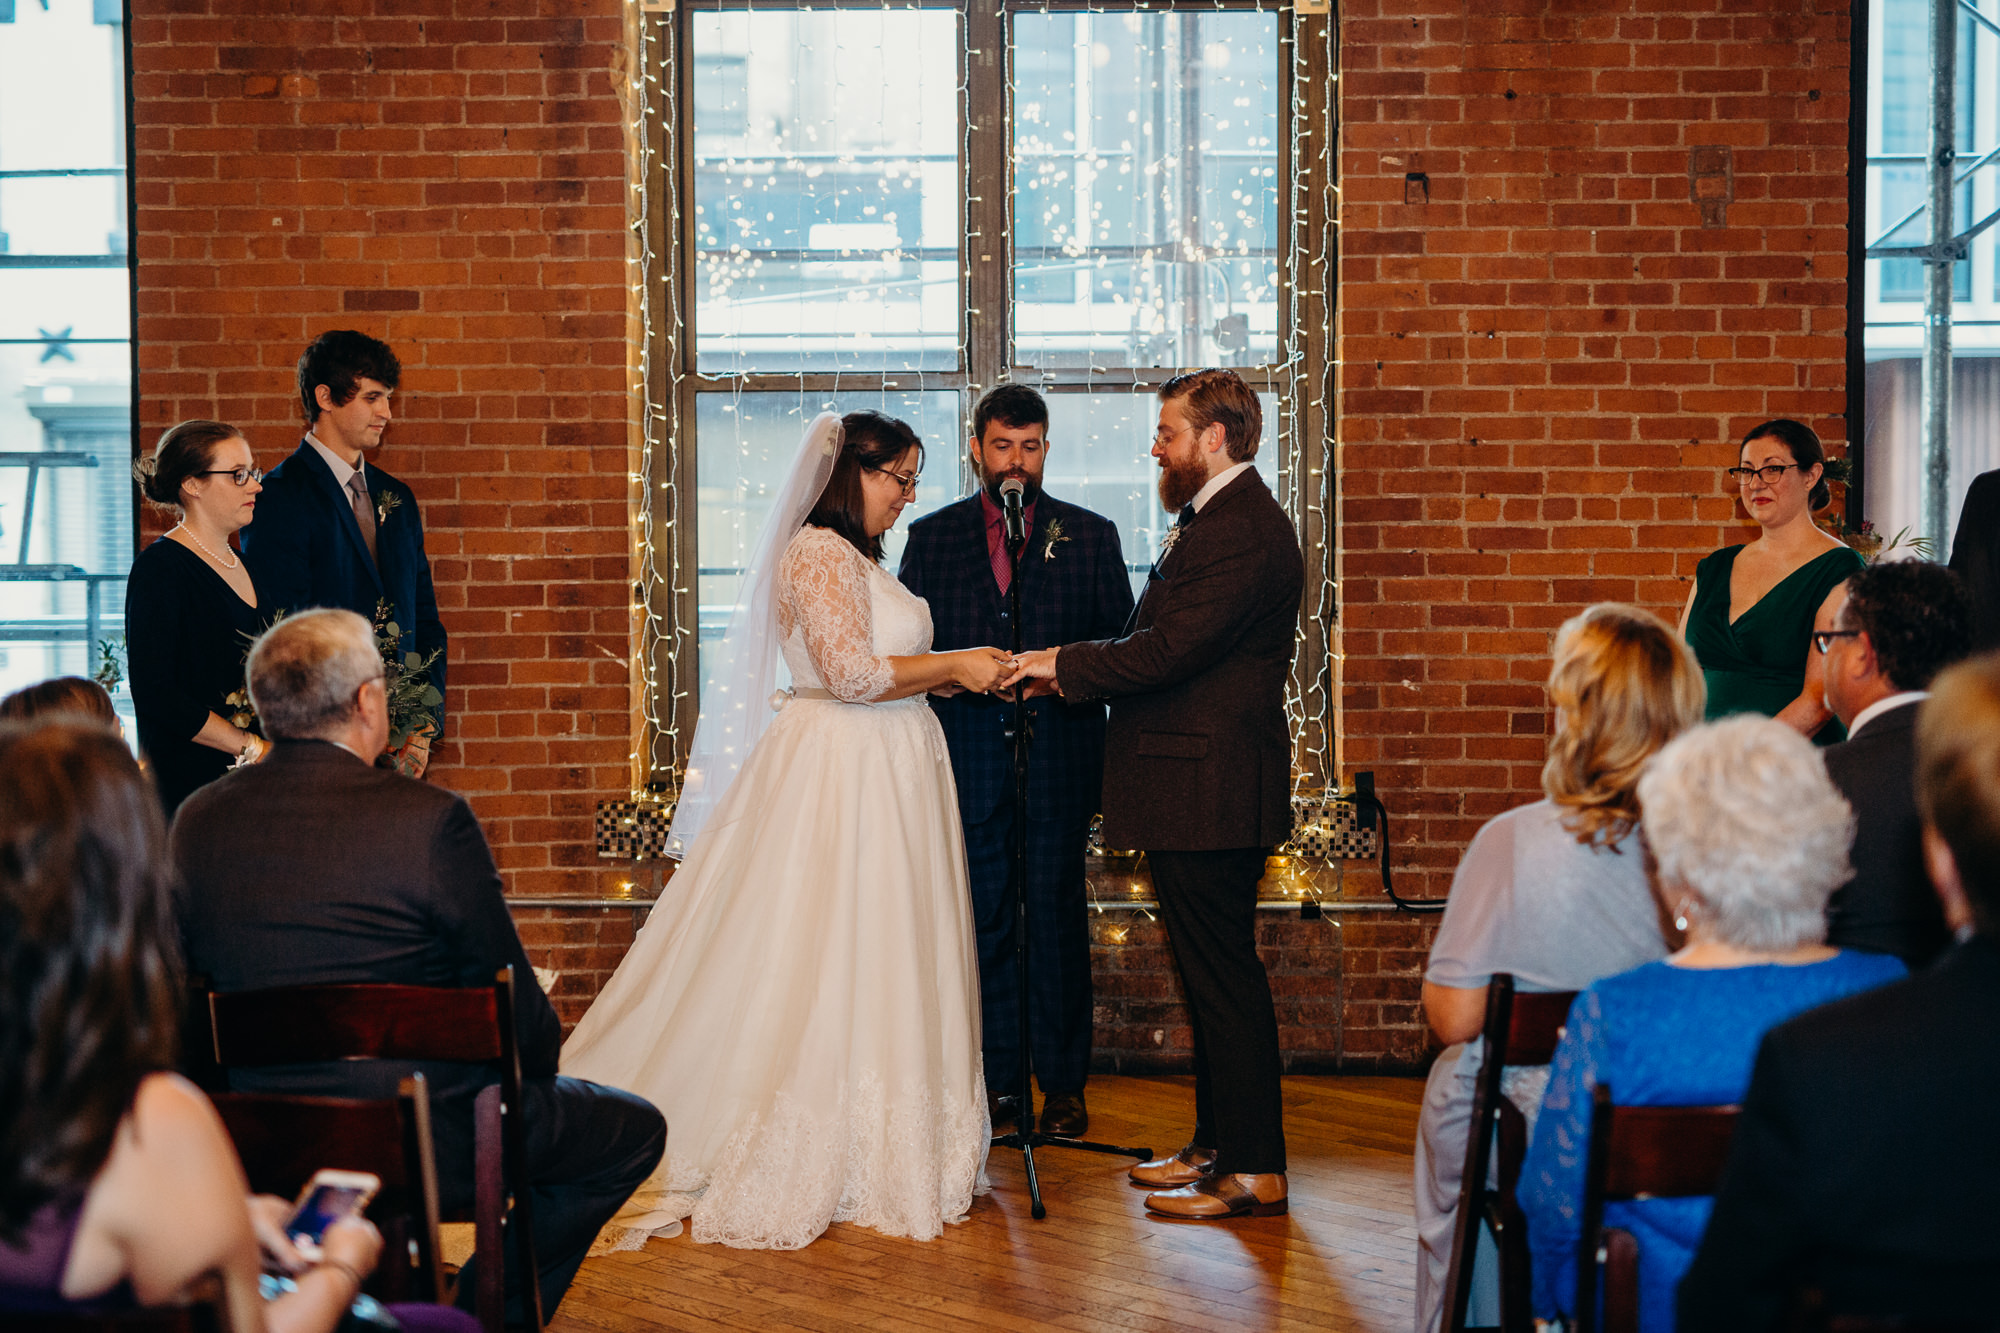 dumbo loft, brooklyn new york city wedding photographer